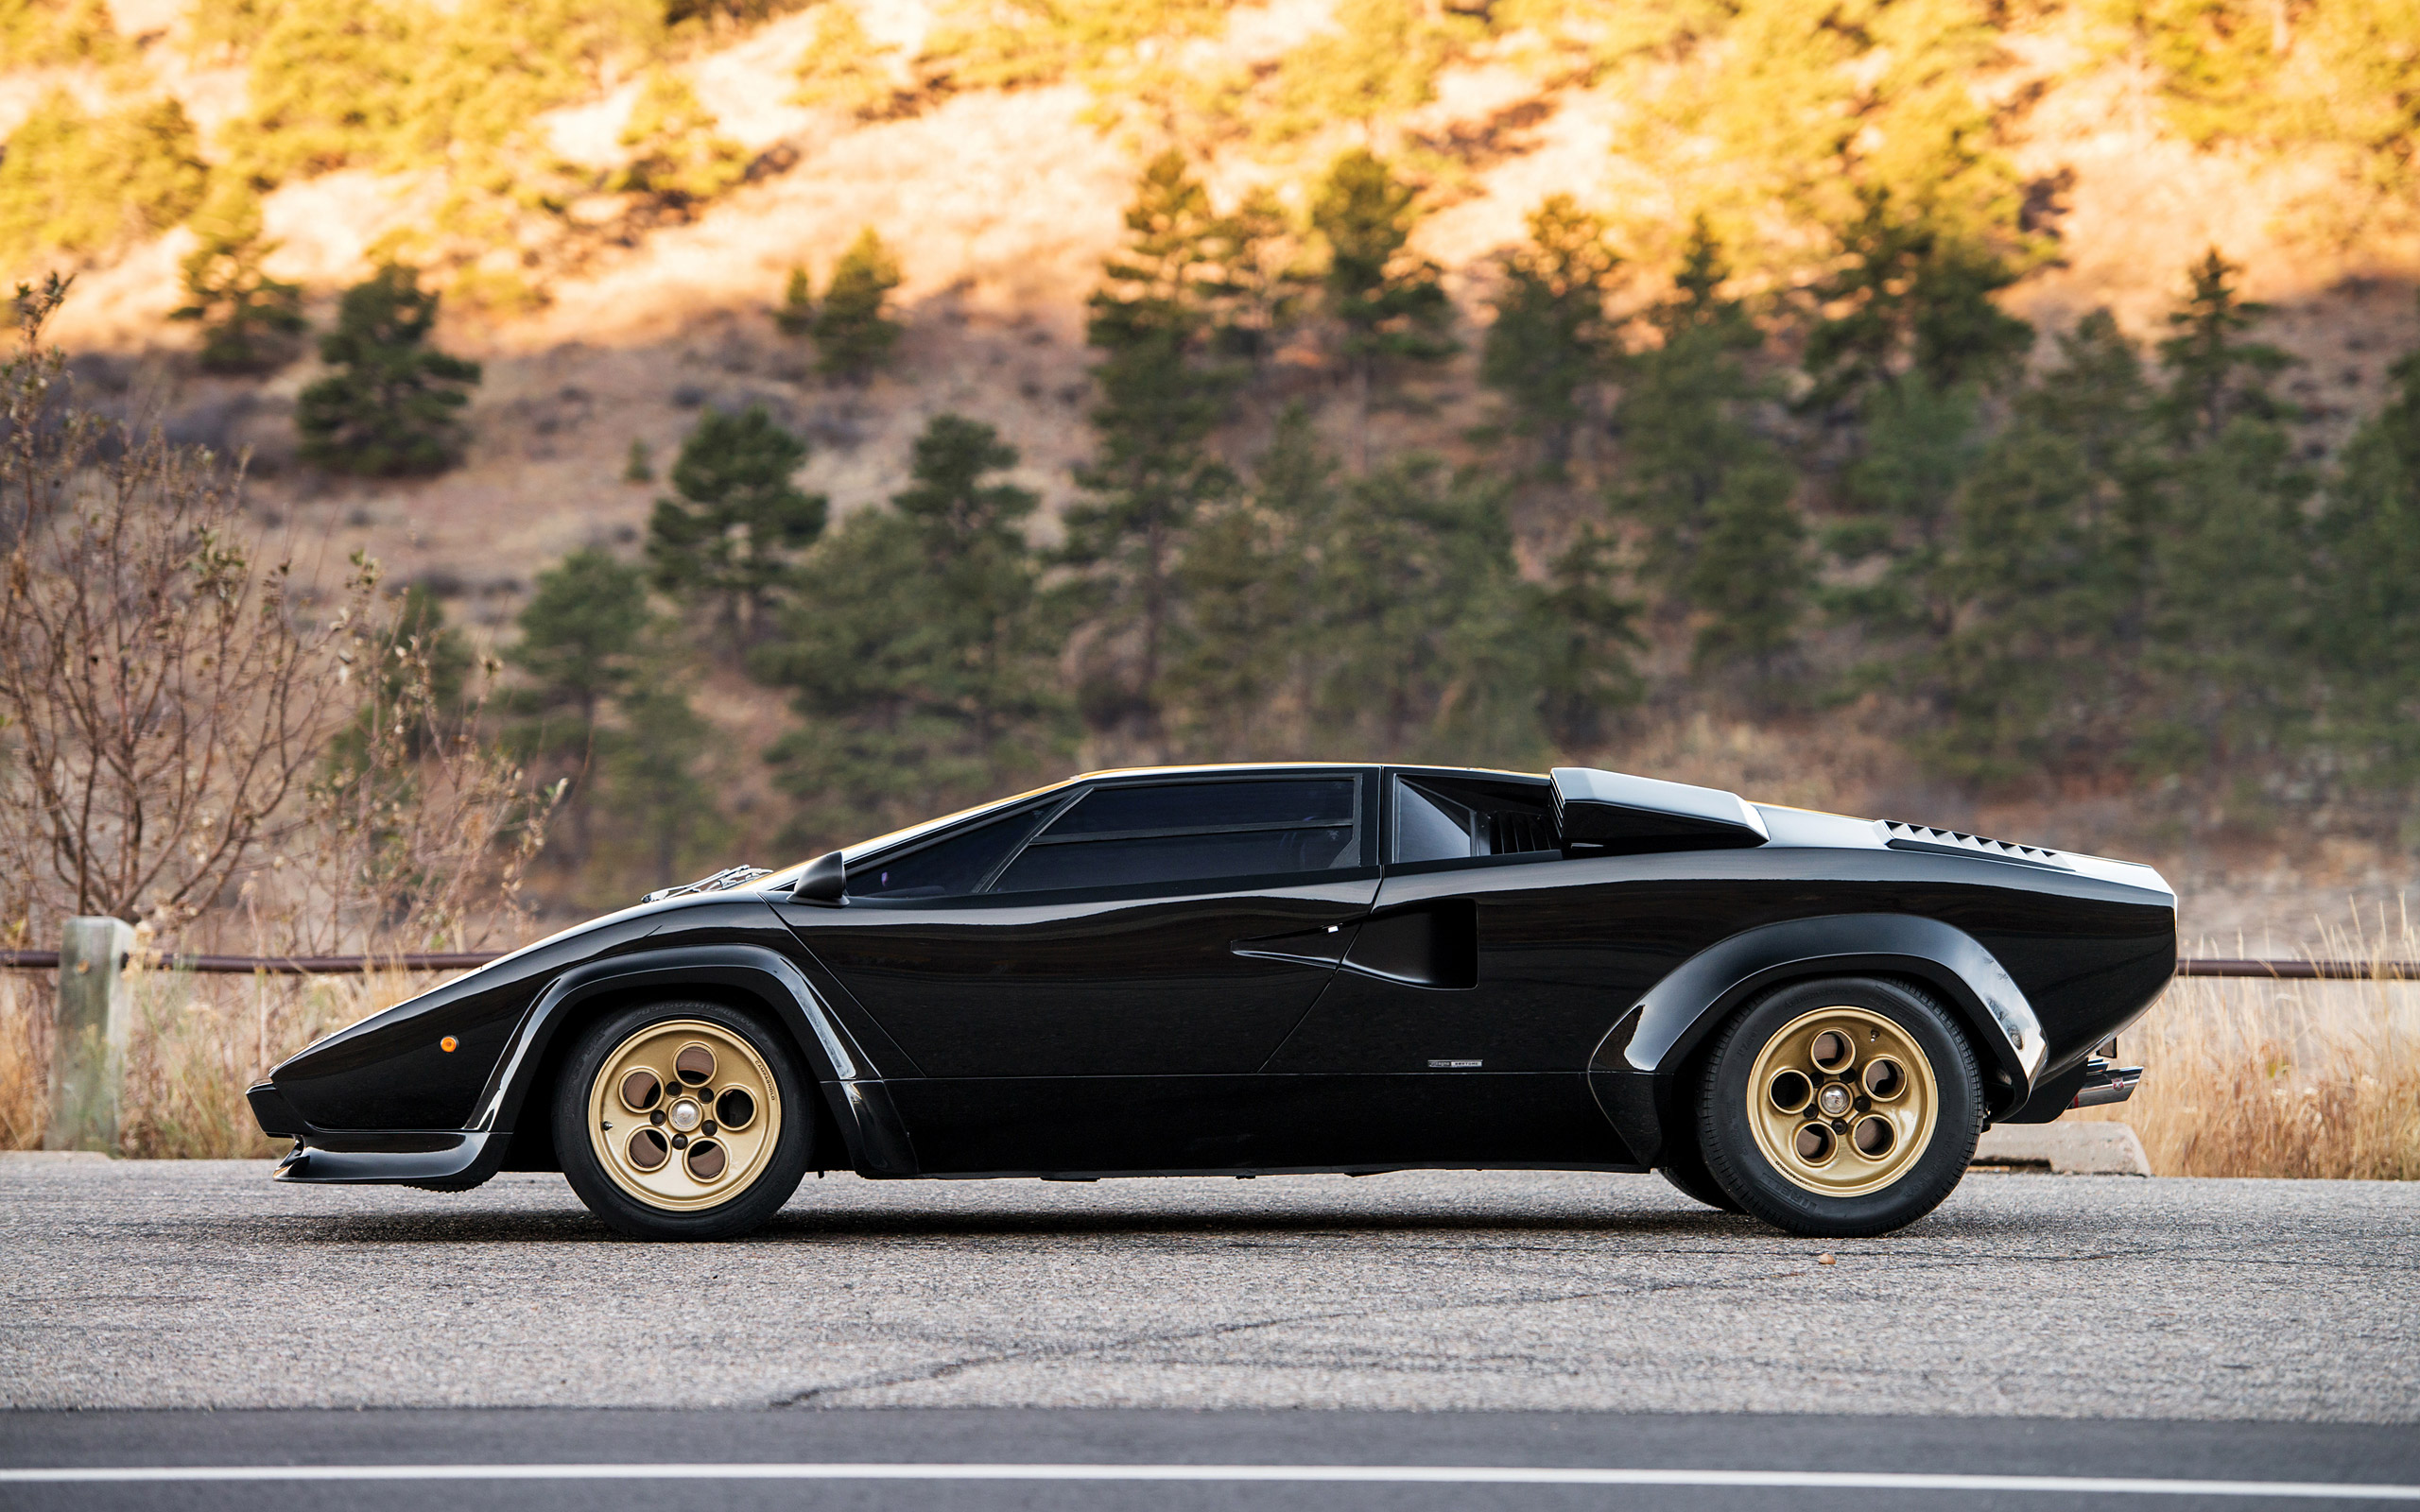 The Lamborghini Countach The Poster Car Of 80s Luxury - vrogue.co